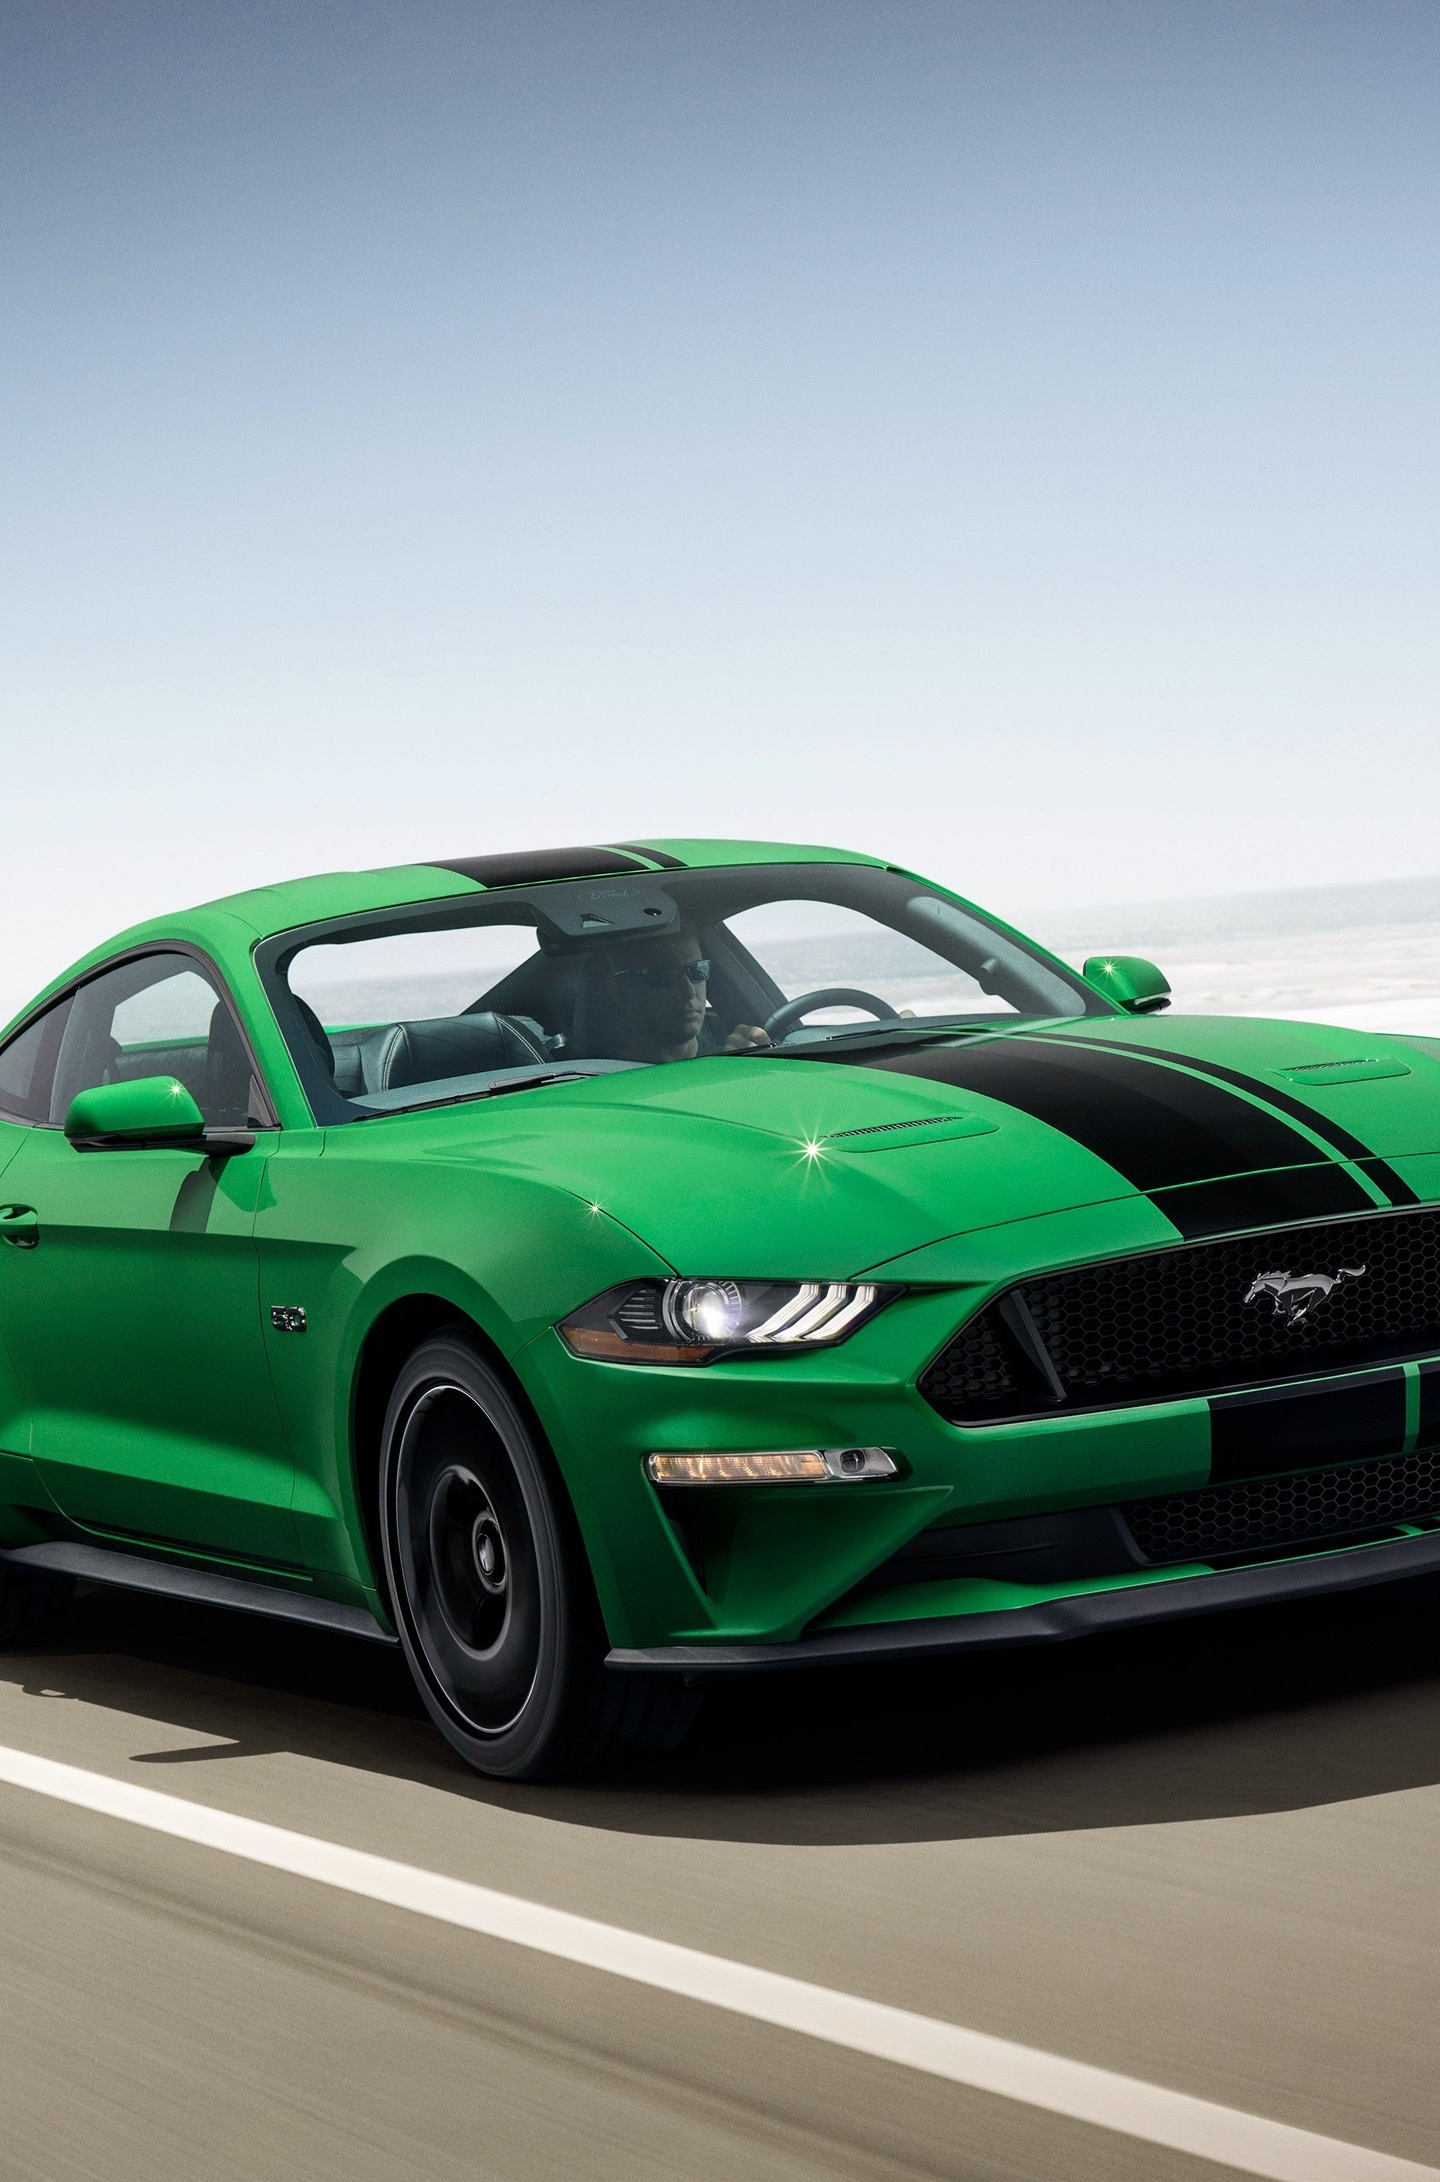 Ford Mustang Gt Fastback, Green Car, 2018, Wallpaper - Ford Mustang Green - HD Wallpaper 